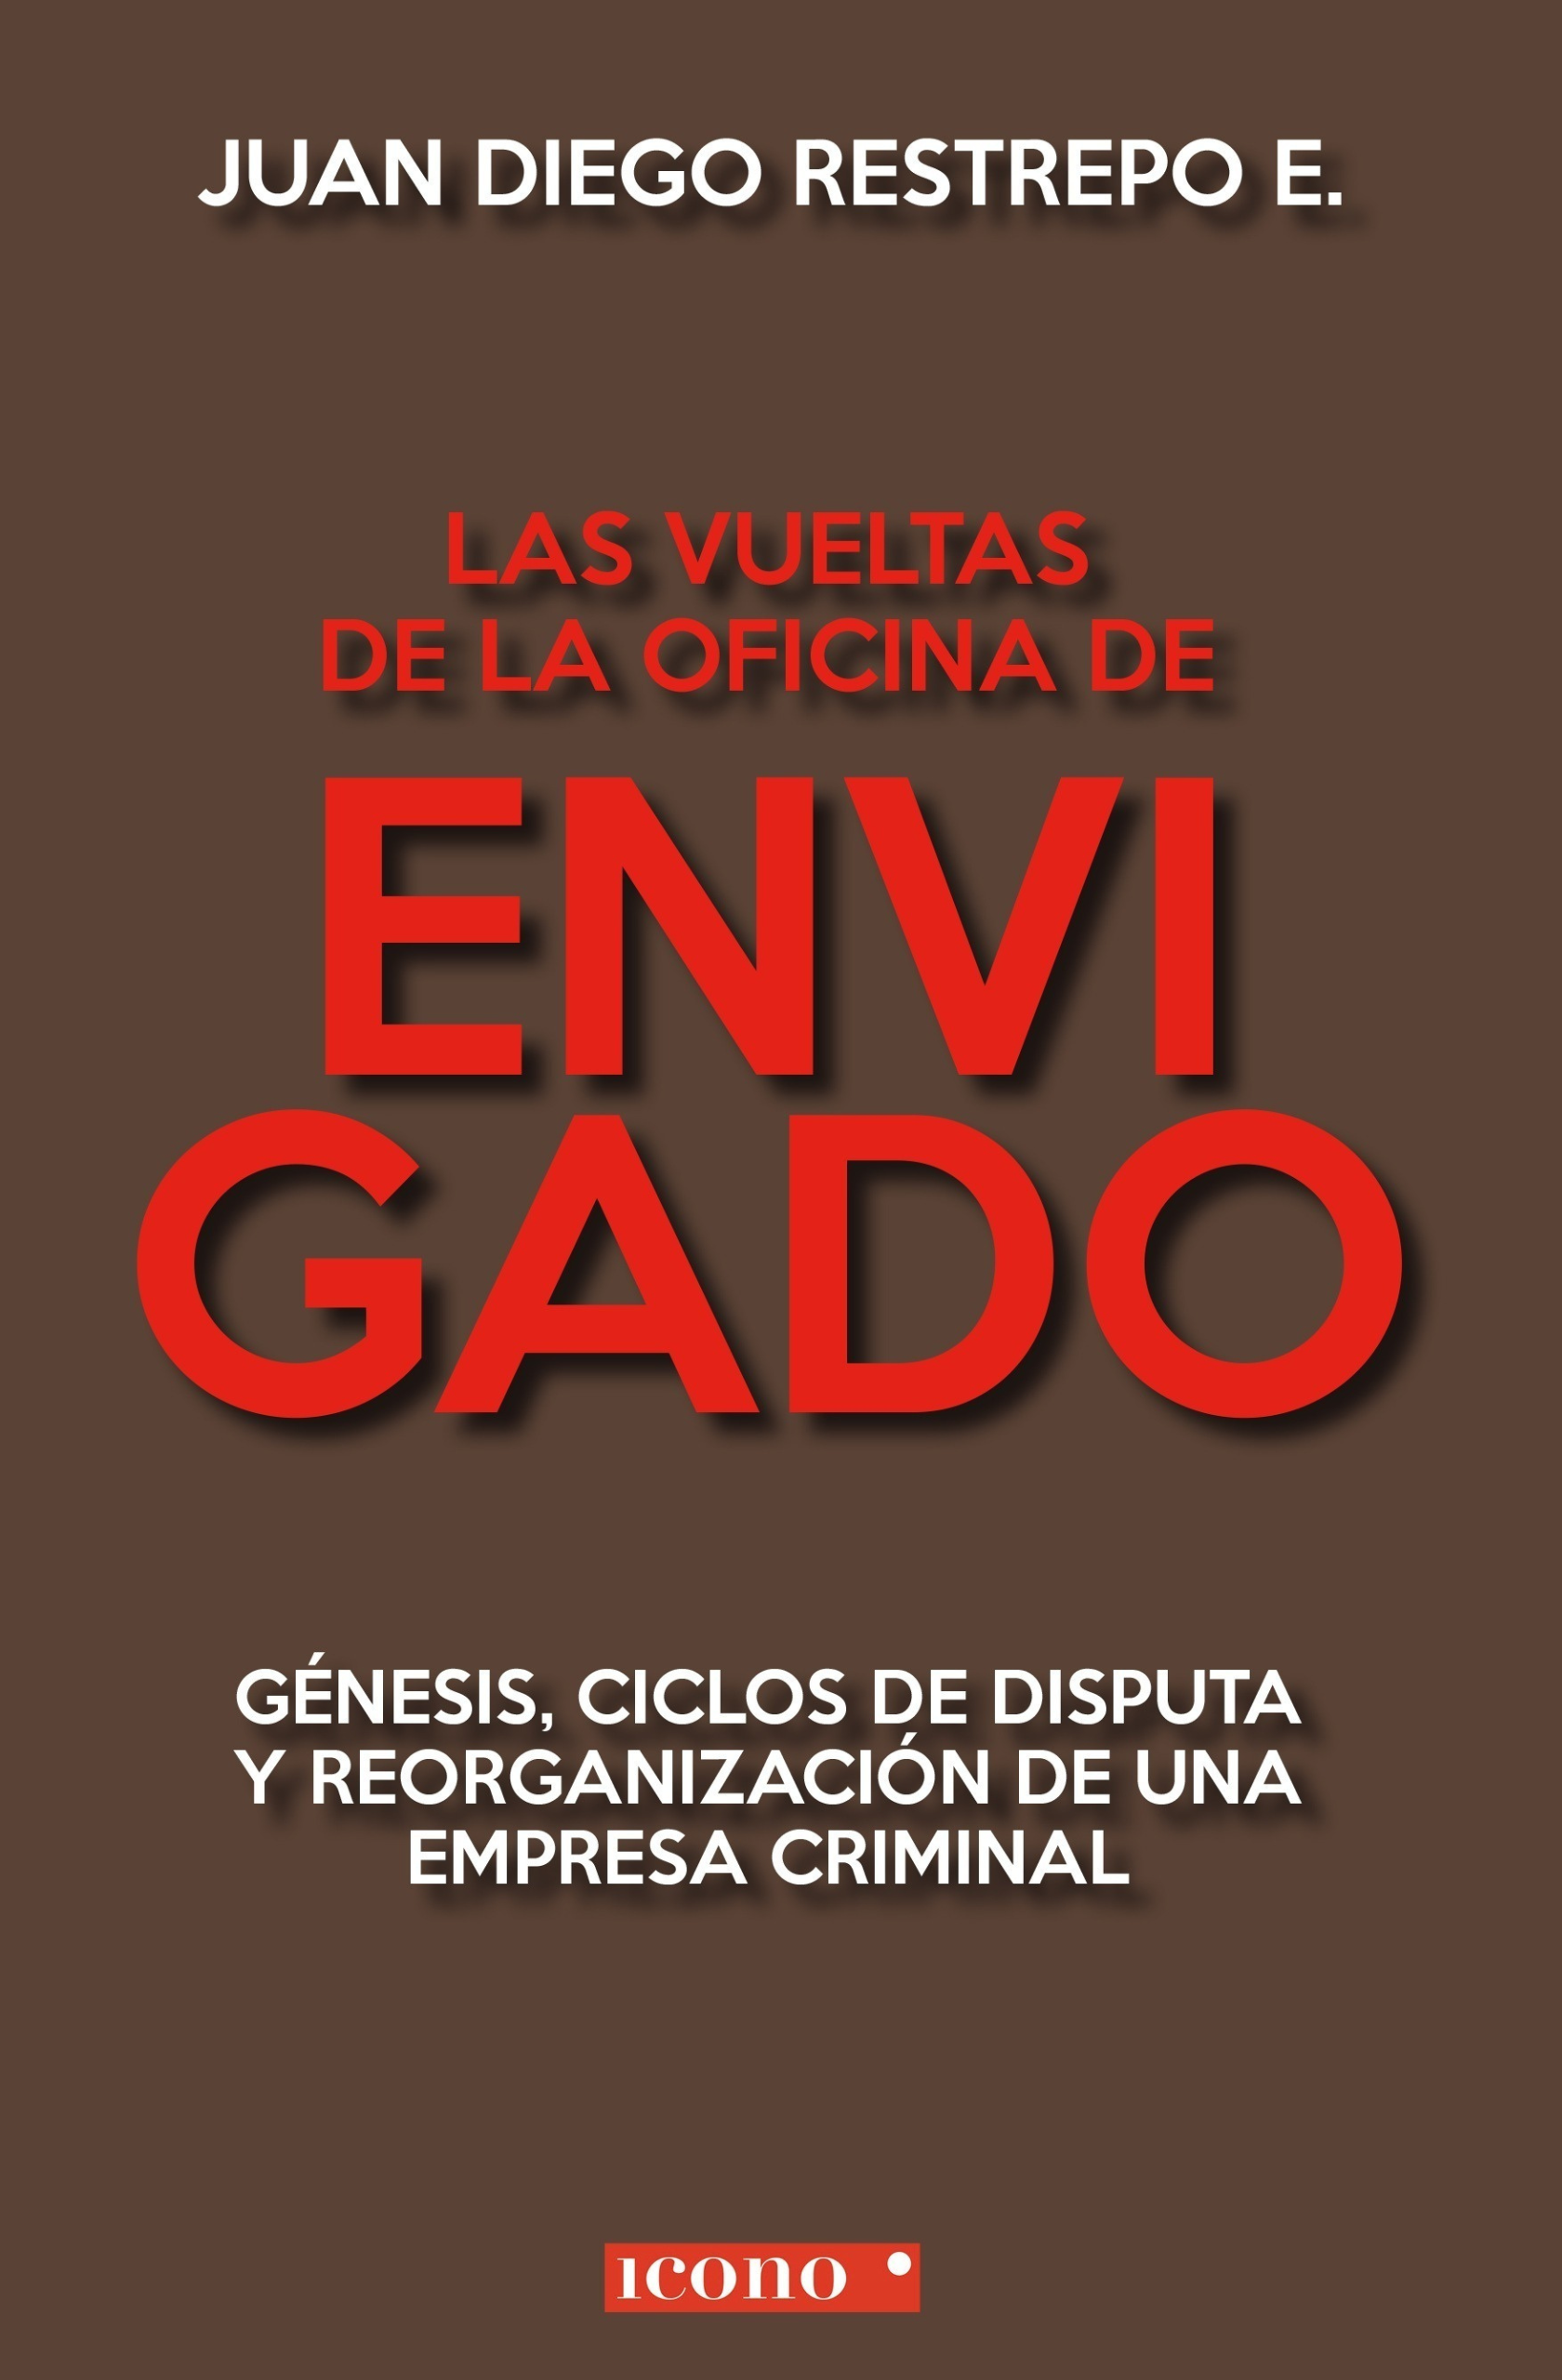 Cover of book "Las vueltas de la oficina de envigado"; the cover is entirely brown with red and white letters